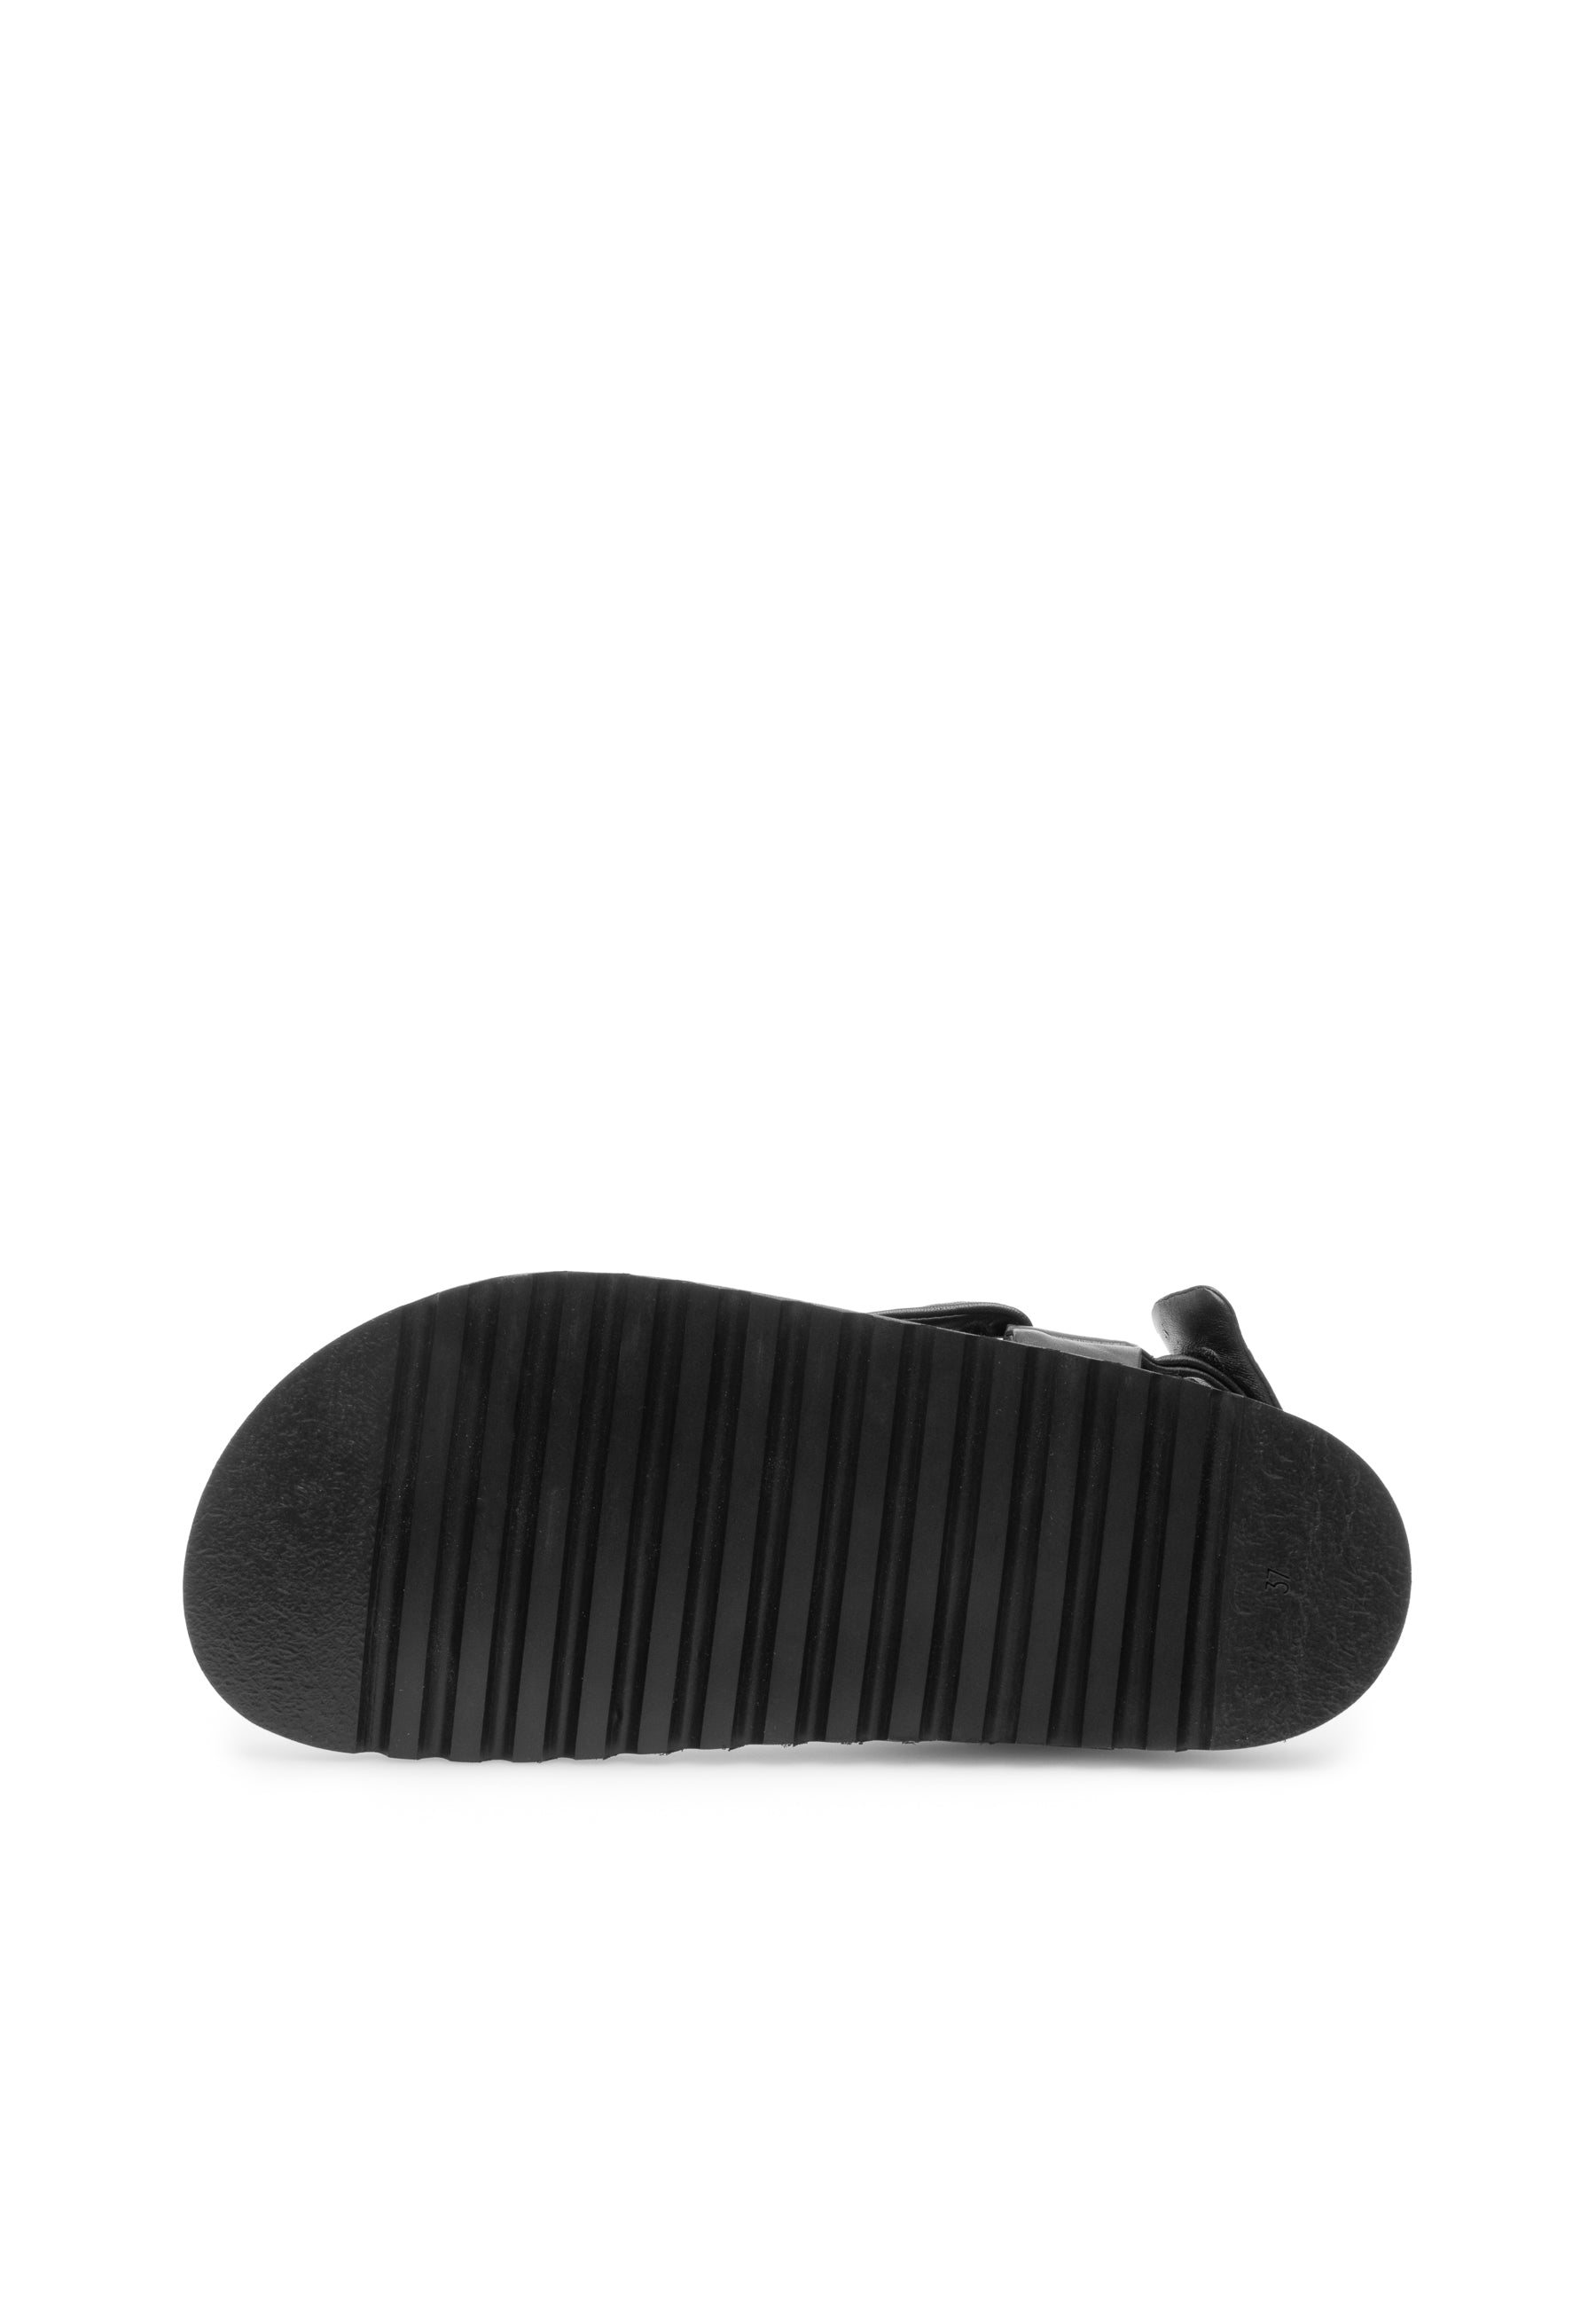 Flora Black Leather Sandals LAST1541 - 7